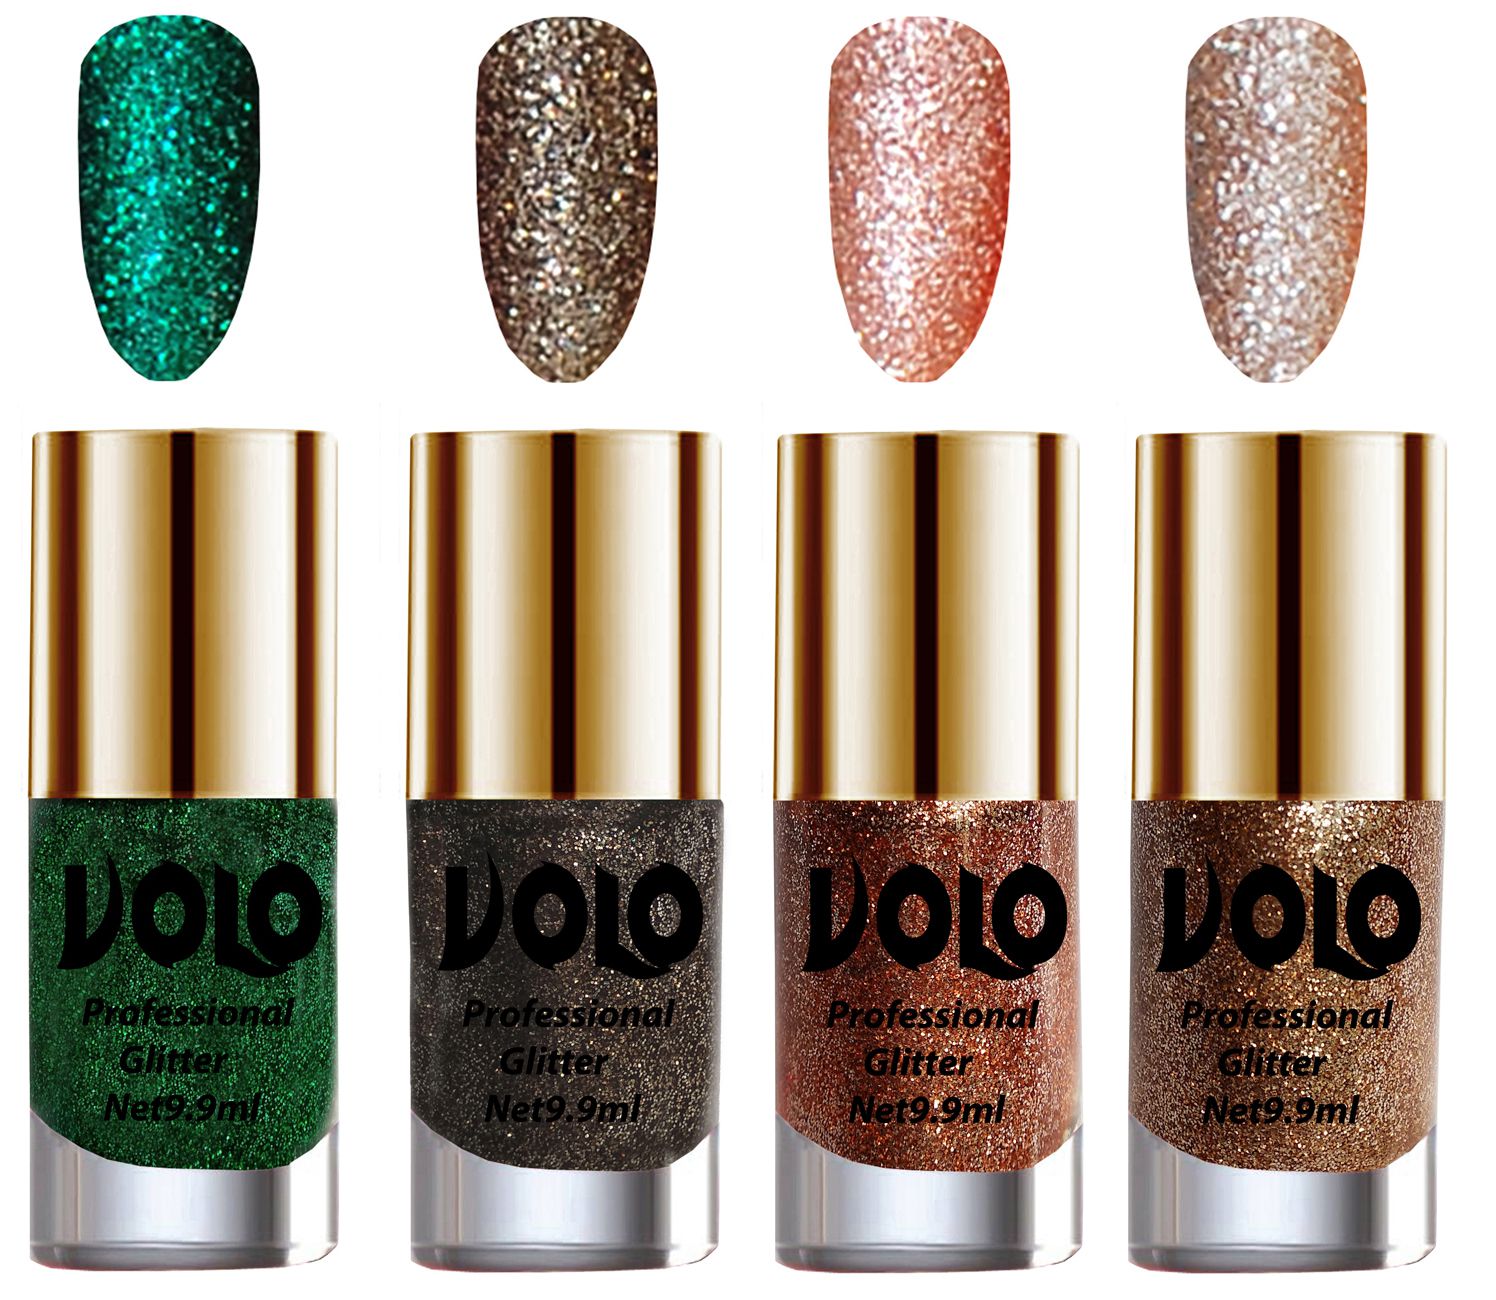     			VOLO Professionally Used Glitter Shine Nail Polish Green,Grey,Peach Gold Pack of 4 39 mL